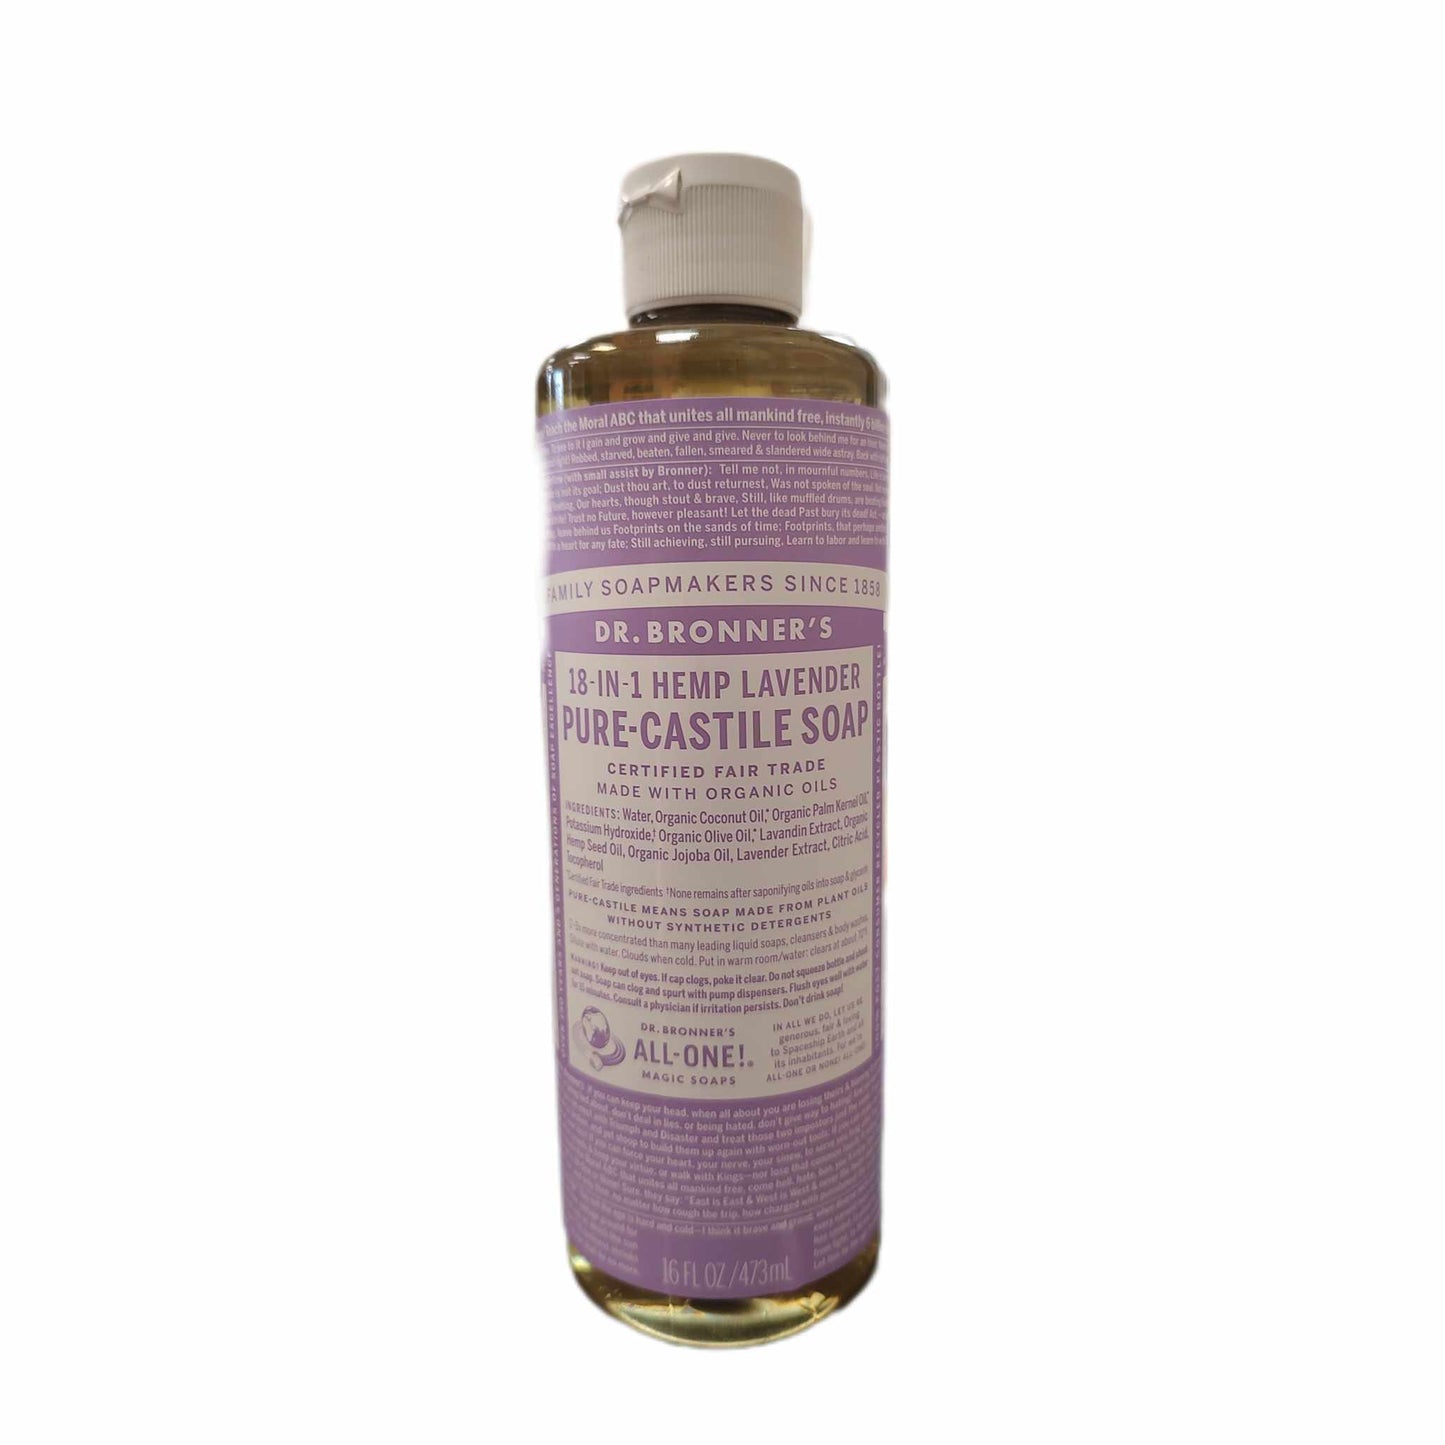 Dr. Bronner's Pure Castile Liquid Soap